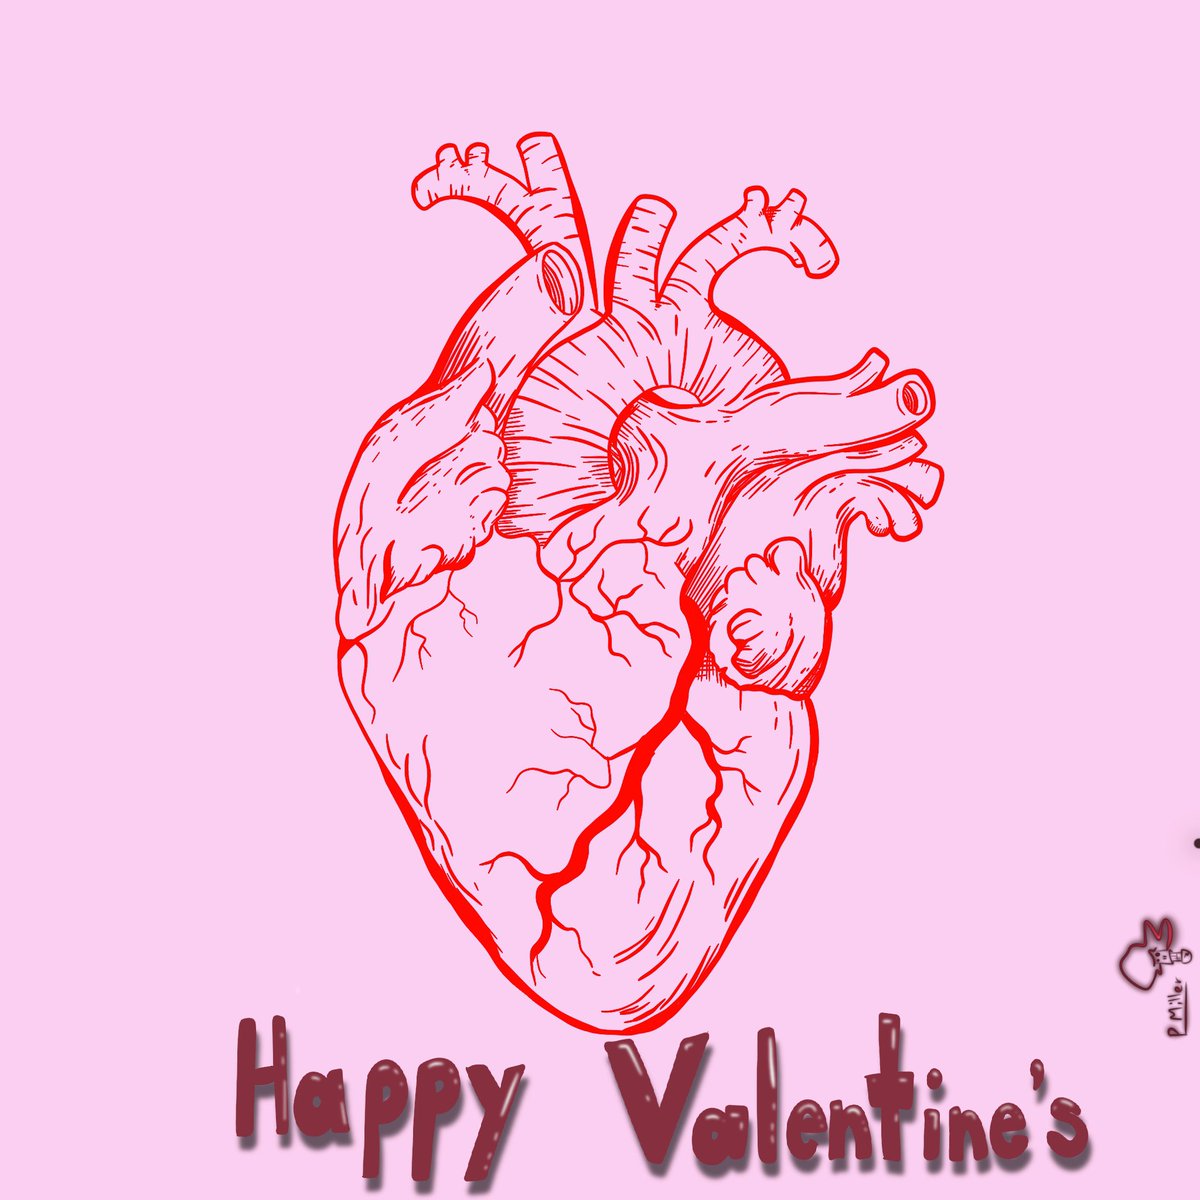 Happy love day ya animals

#valentines #heart #iheartyou #anatomicalheart #art #artist #design #inkart #illustration #drawing #myart #artpractice #draweveryday #medical #heartart #lineart